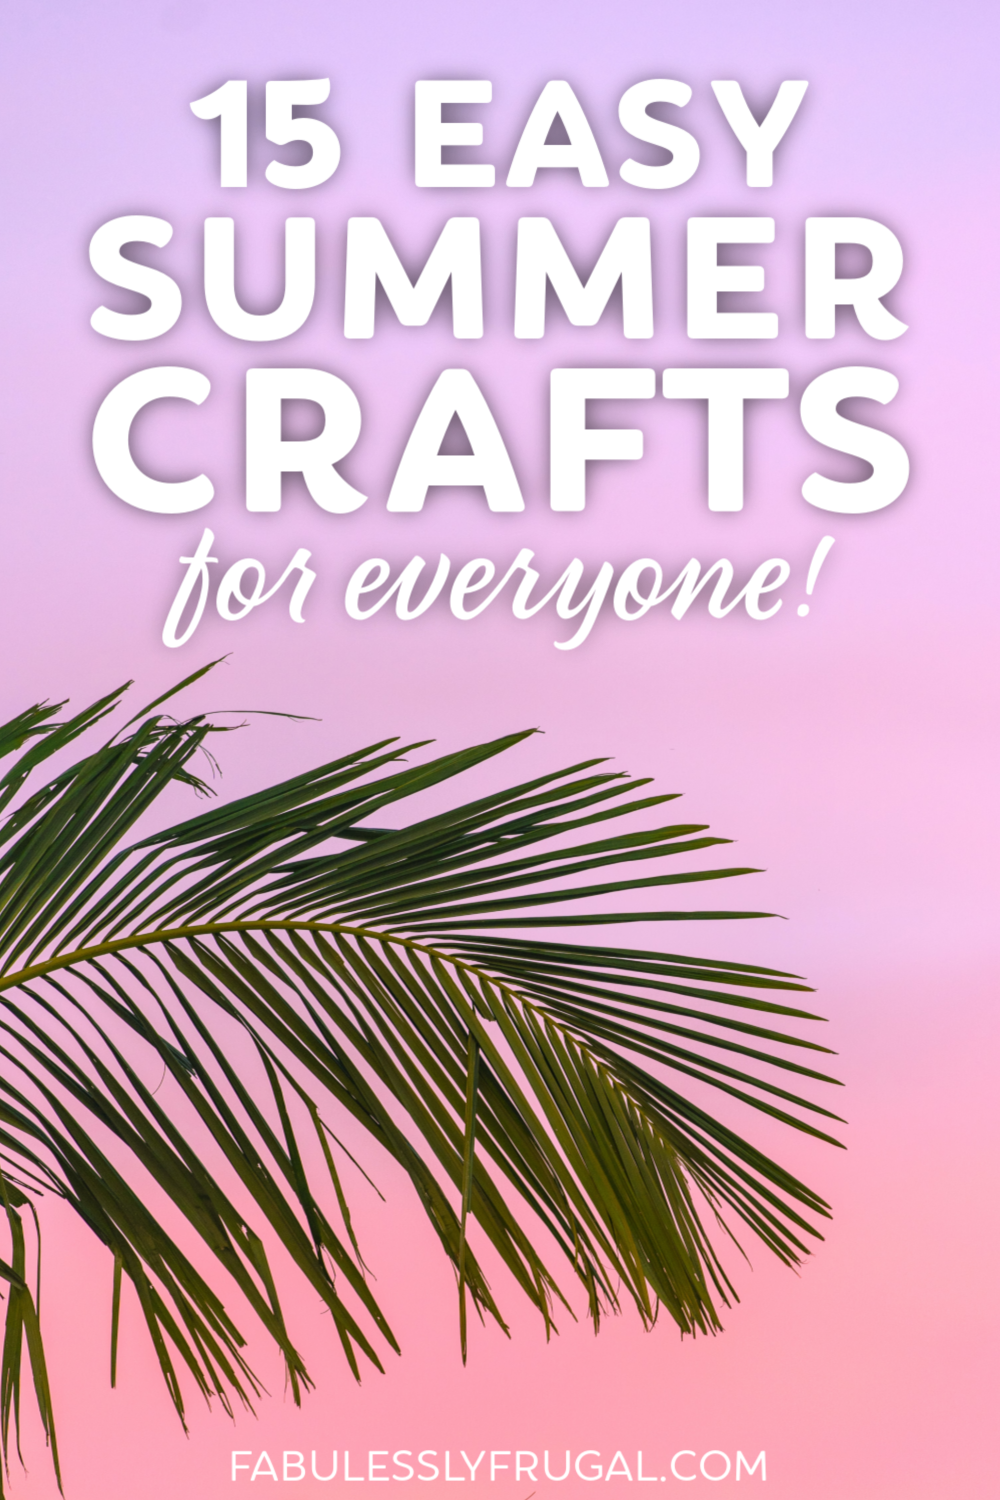 Easy summer crafts